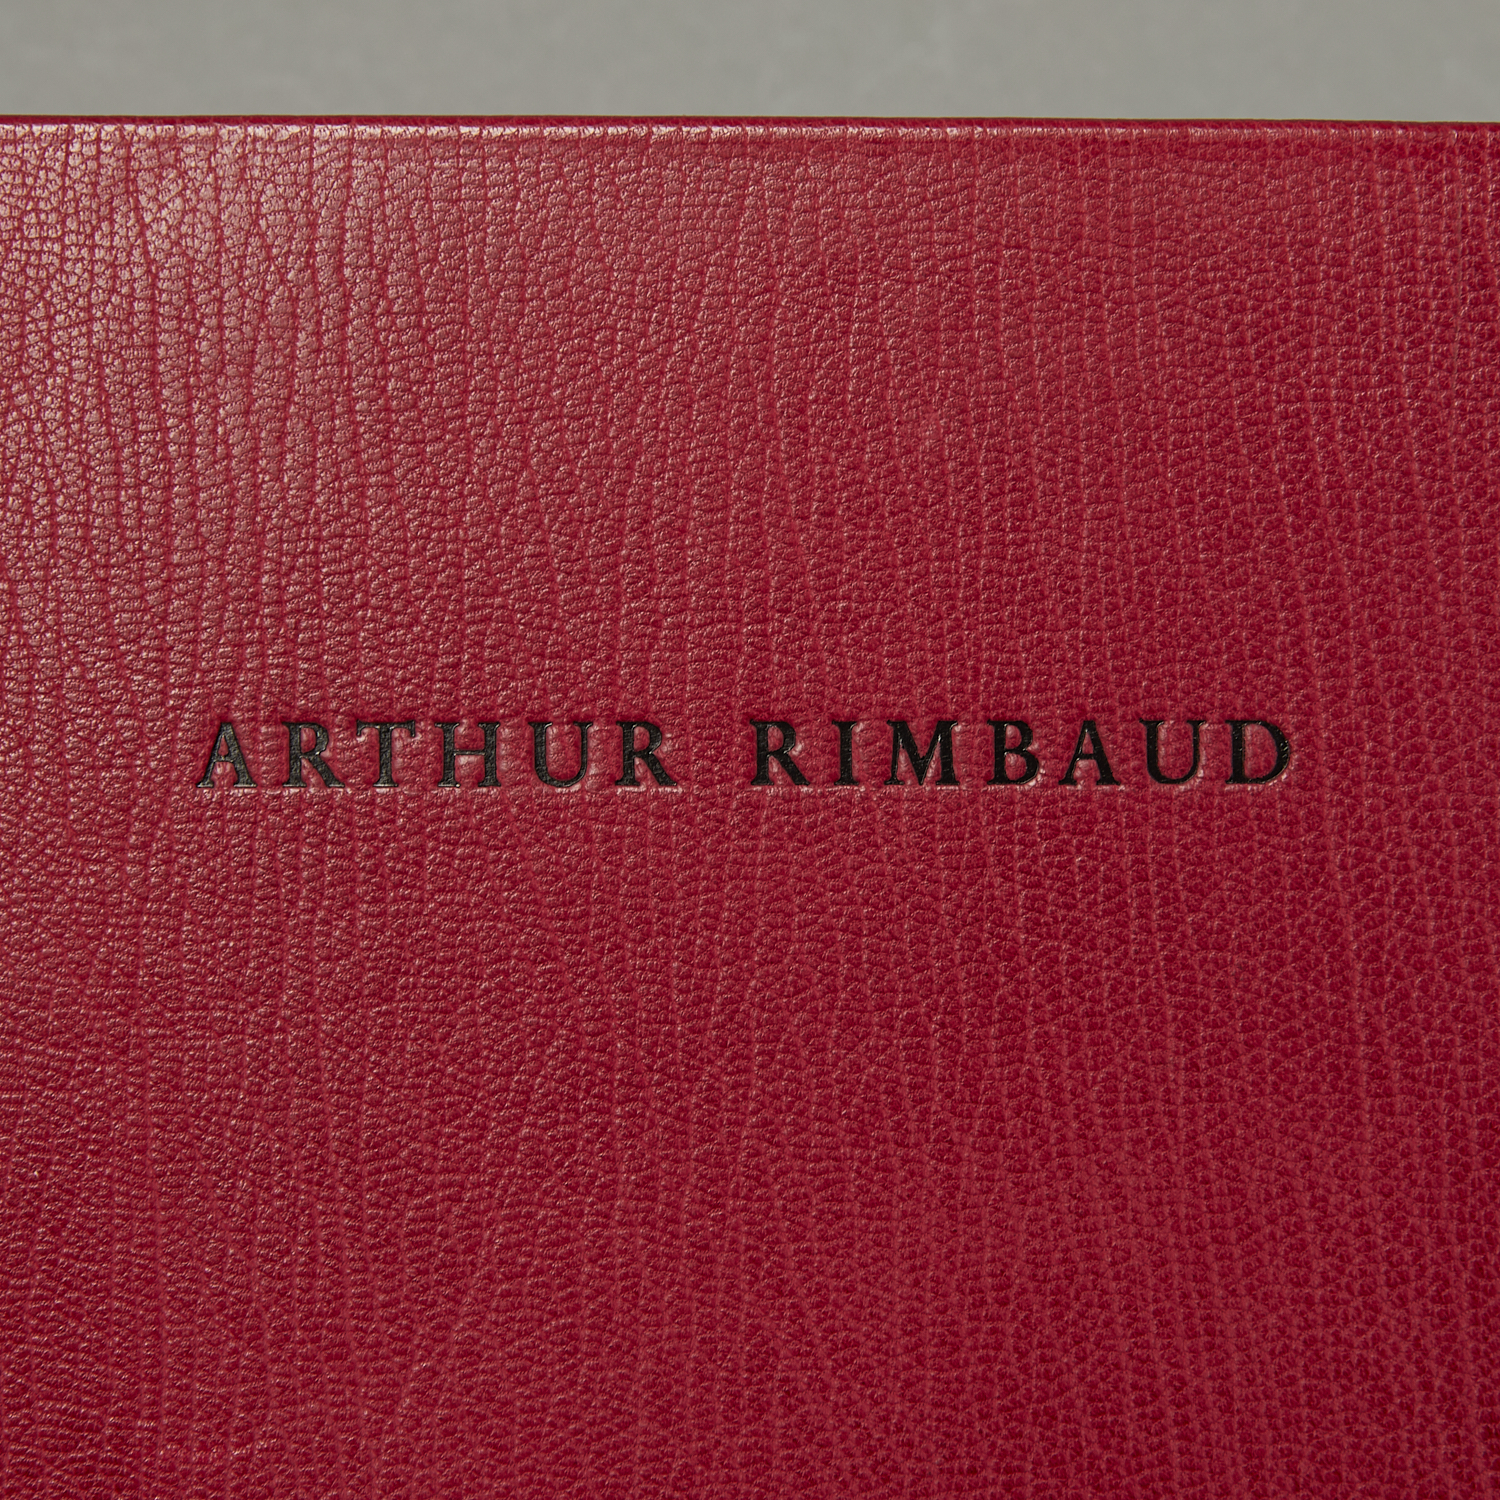 Rimbaud "A Season in Hell" Signed Mapplethorpe - Image 8 of 13